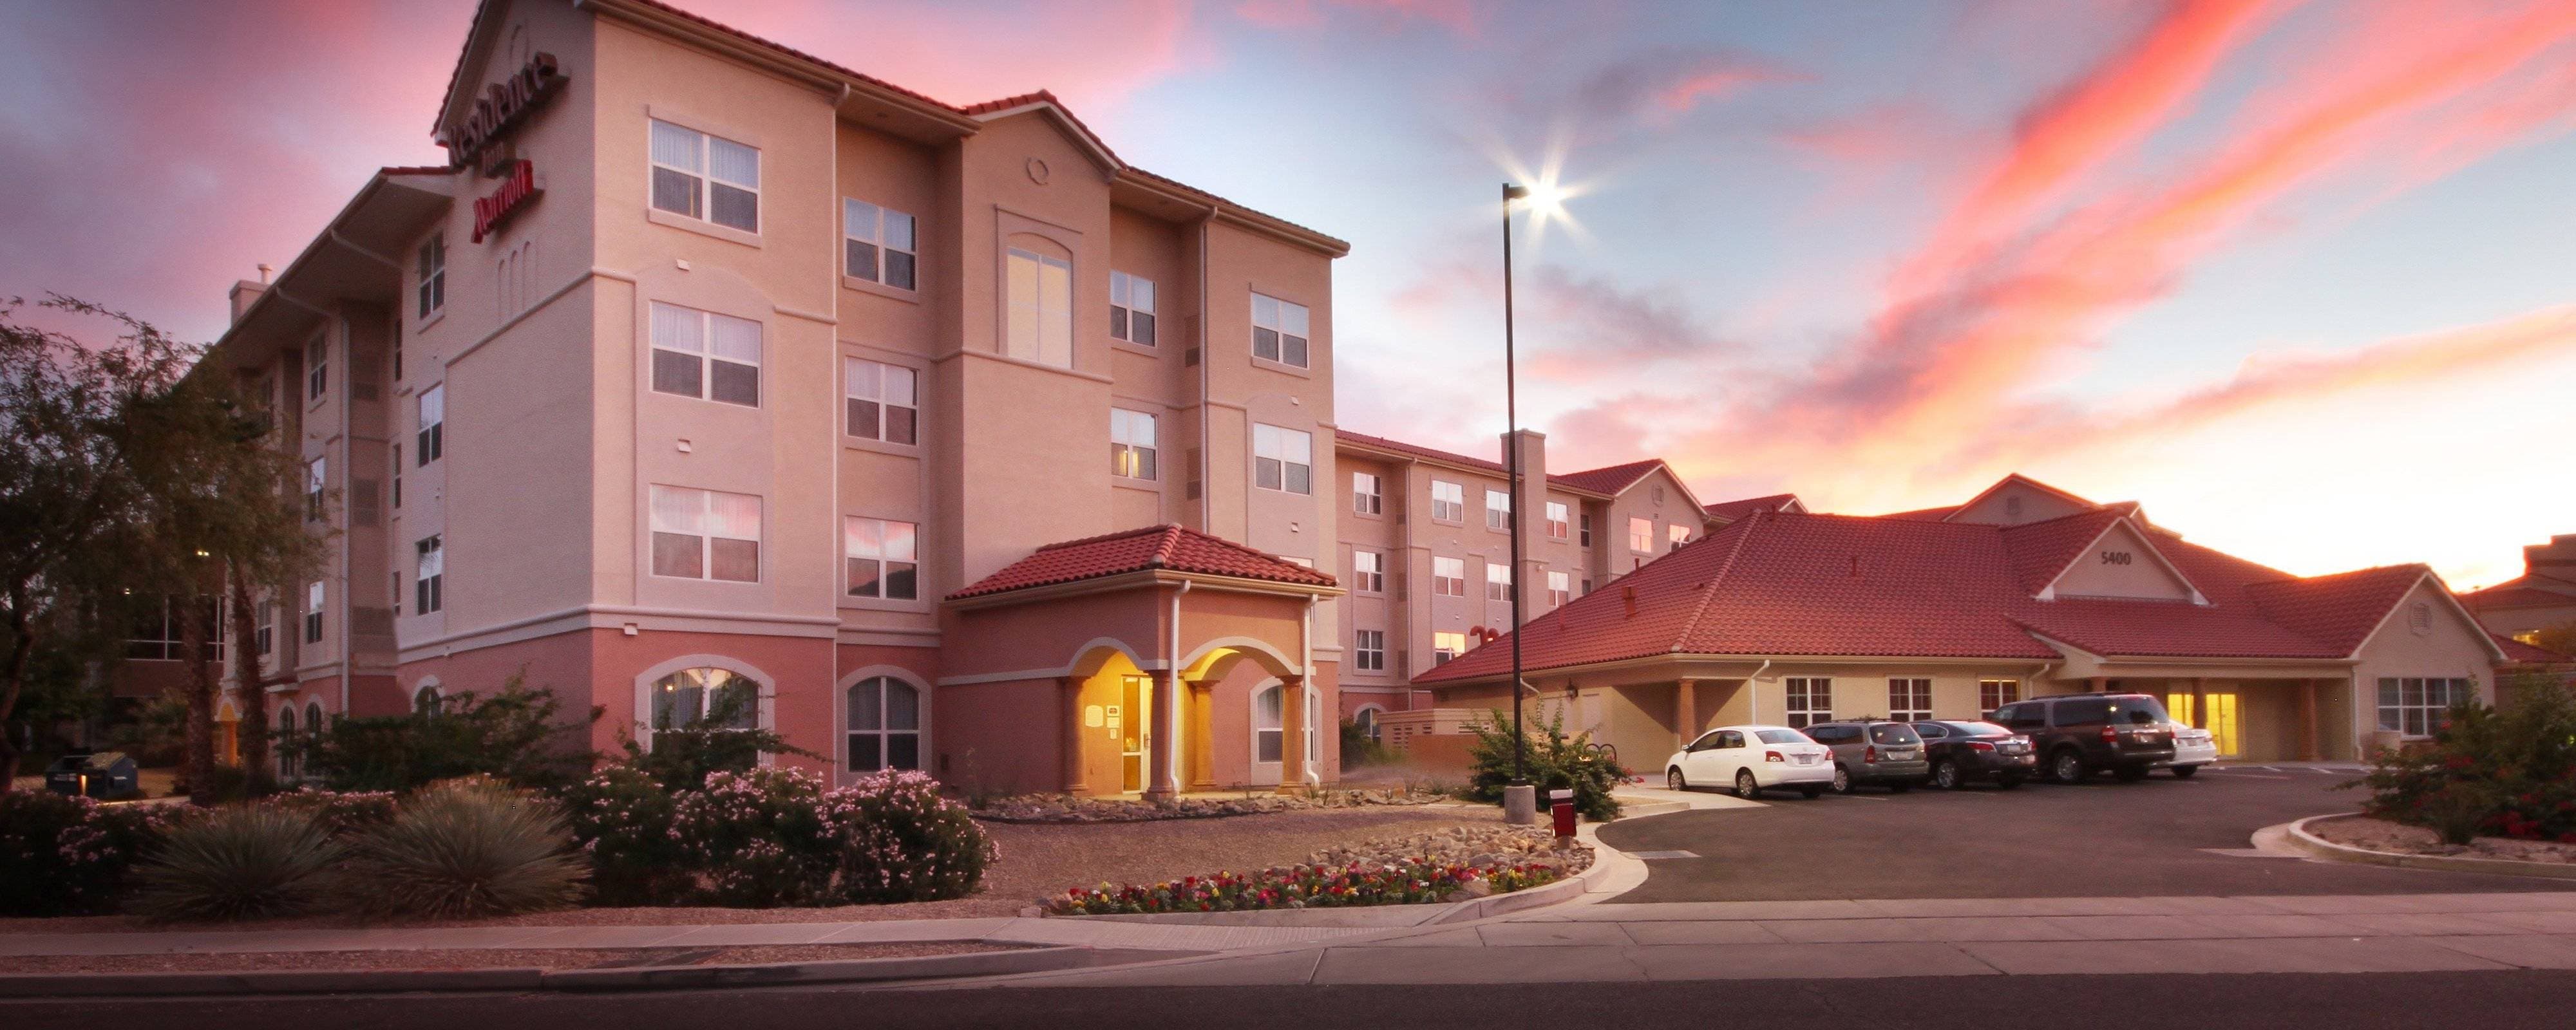 Hotel near St. Joseph Hospital, Tucson, AZ | Residence Inn